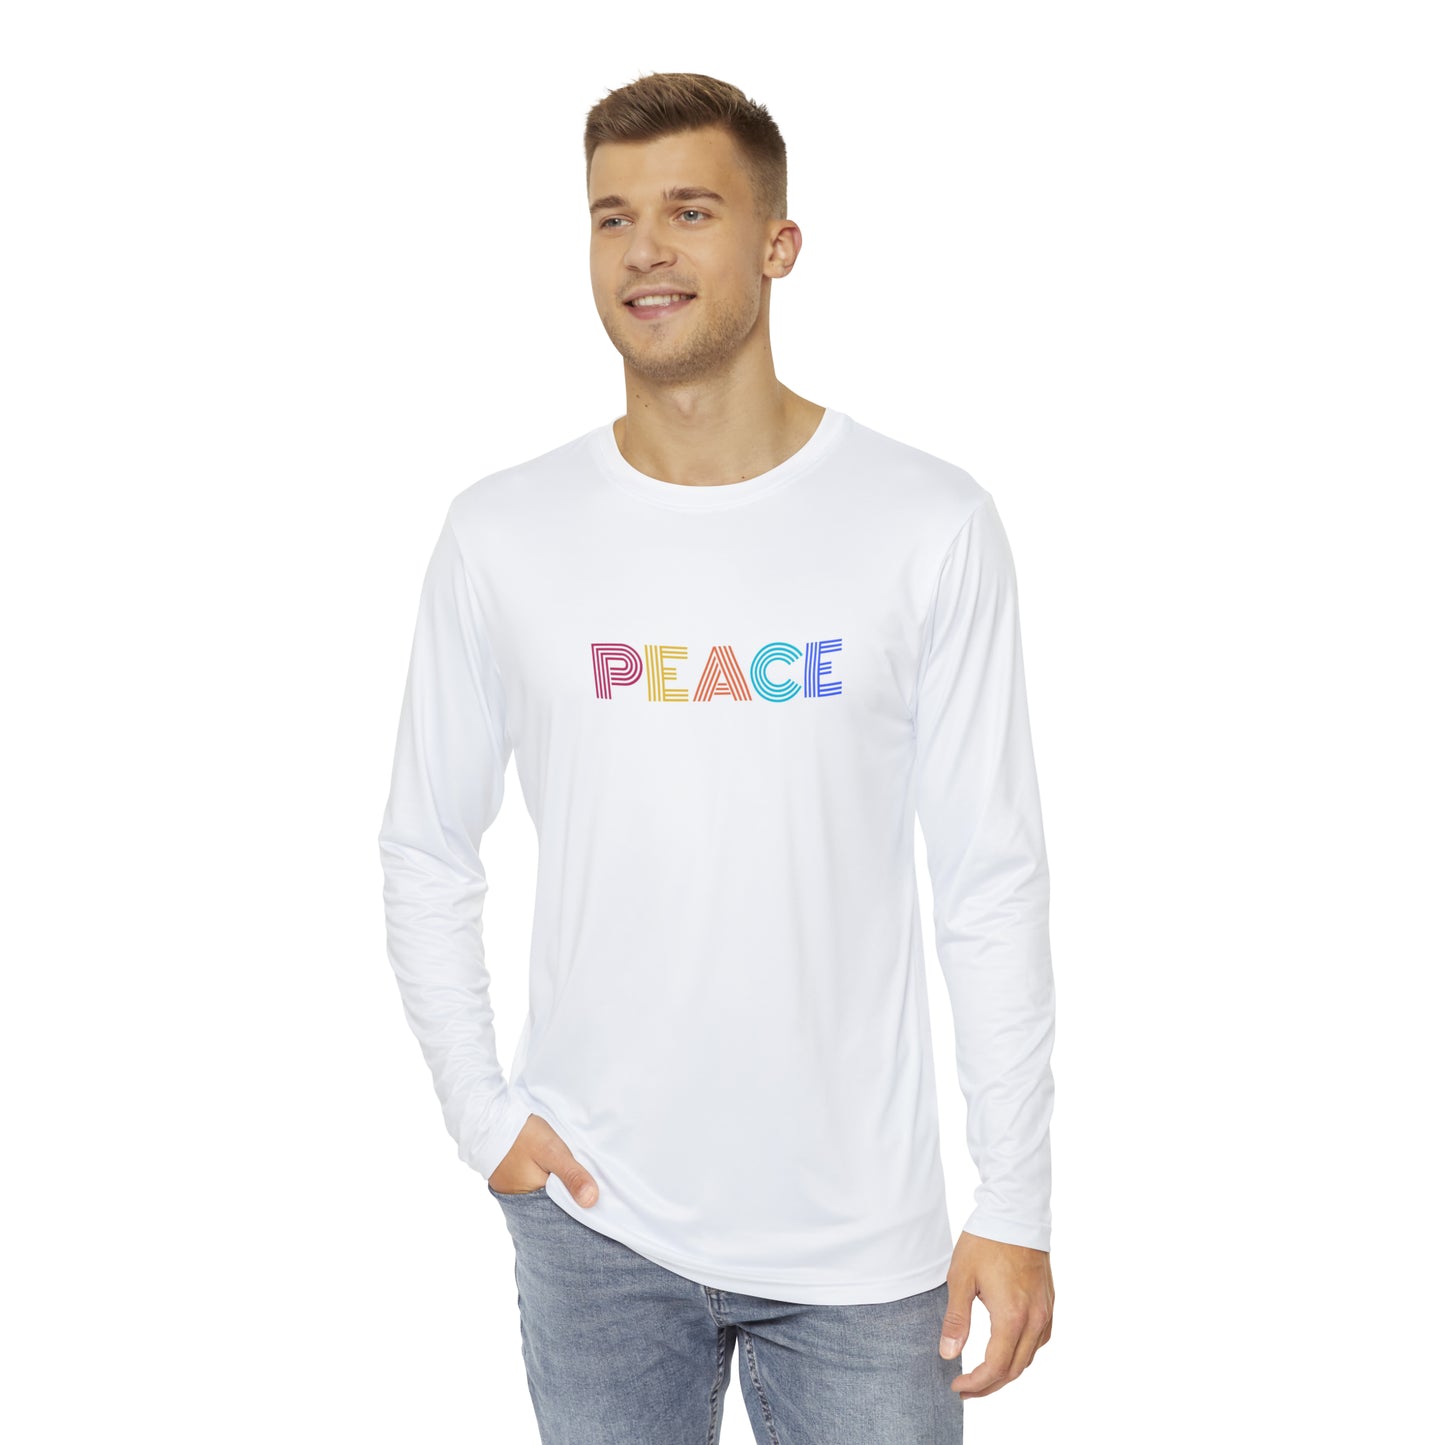 PEACE Men's Long Sleeve Shirt, White